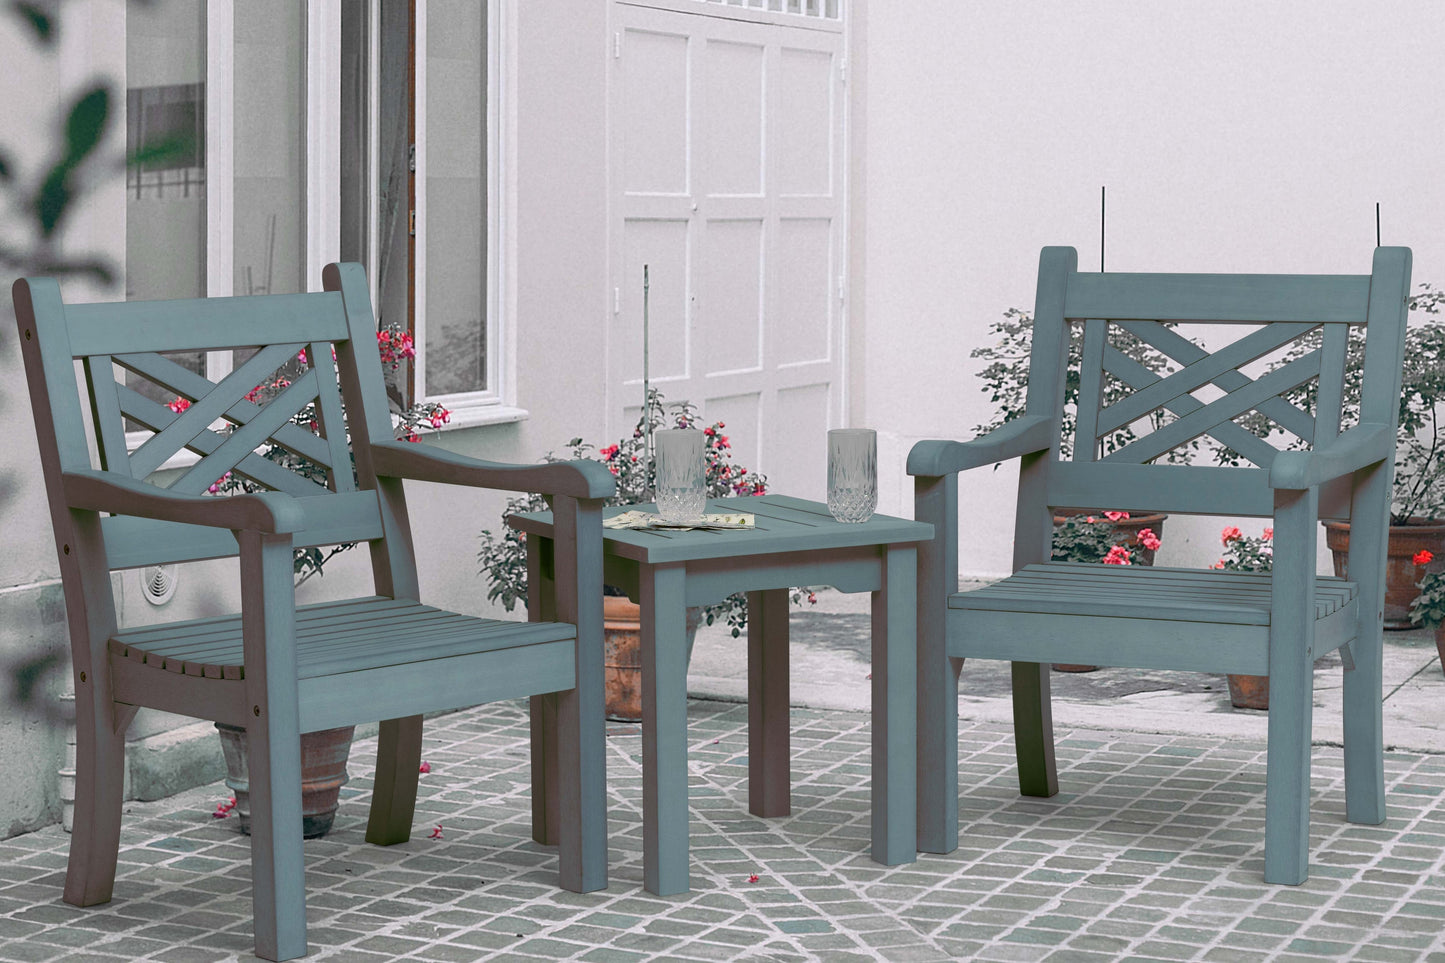 Winawood Wood Effect Side Table - L49.3cm x D49.3cm x H53cm - Powder Blue